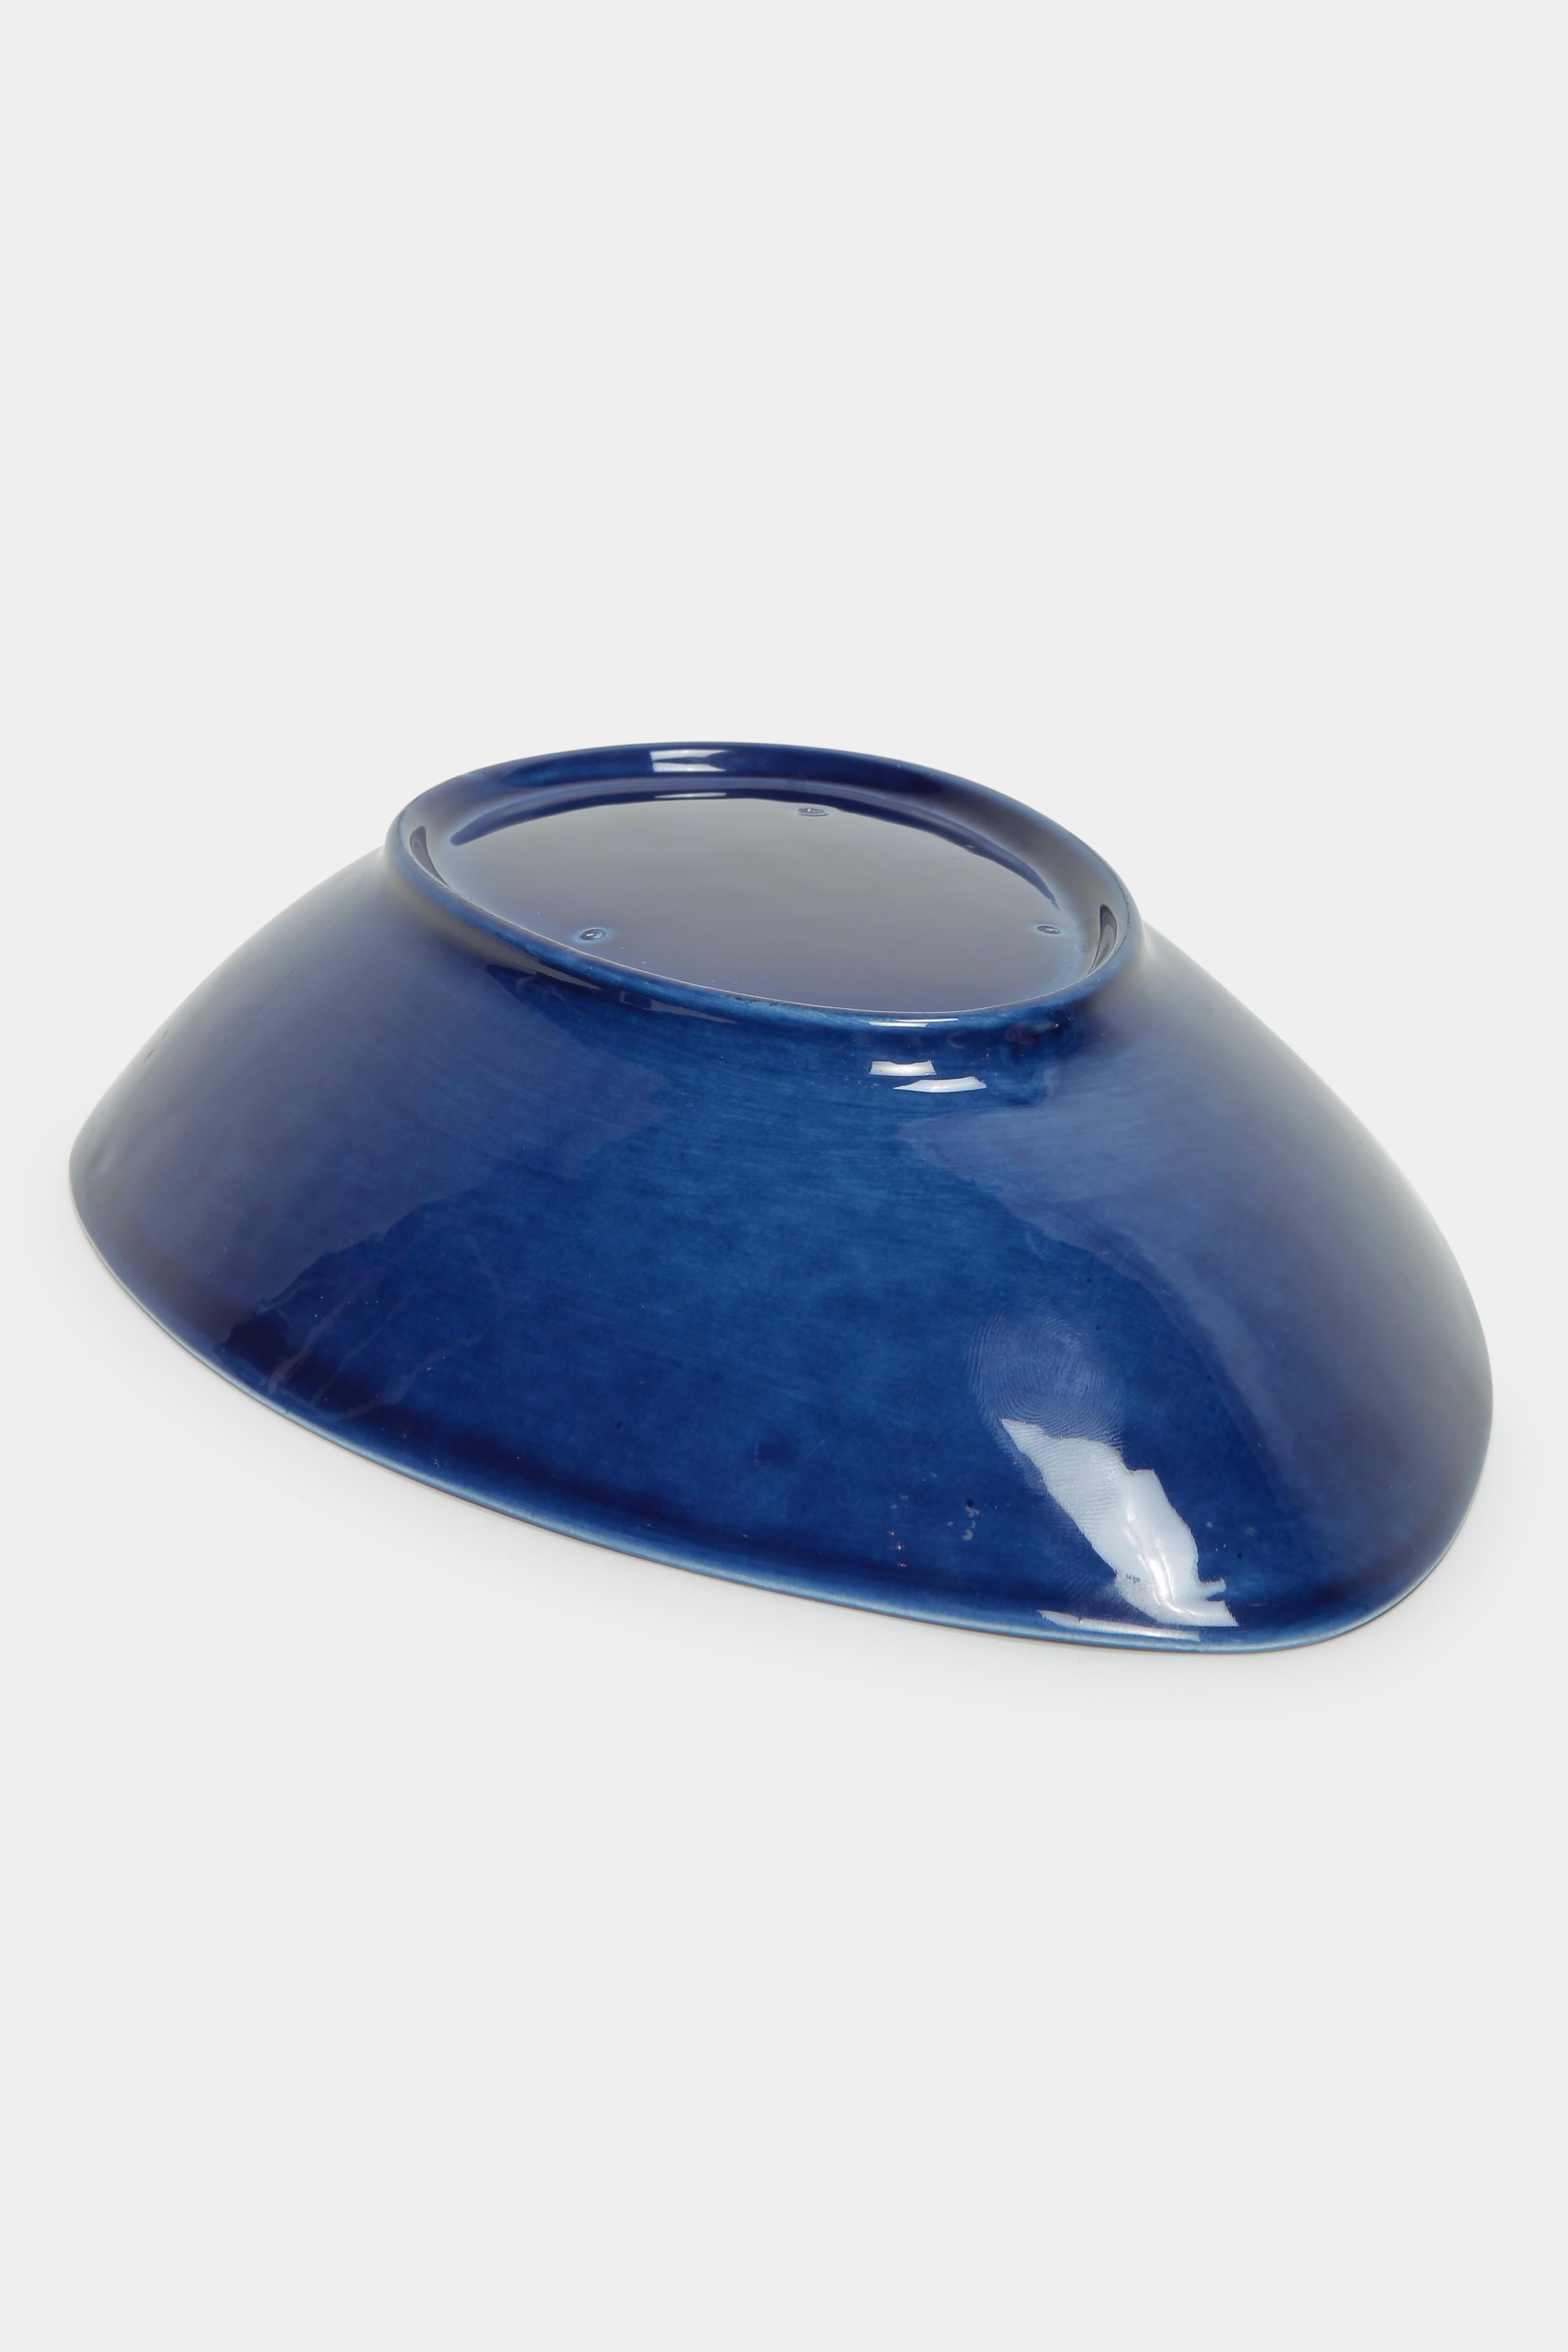 Glazed Blue Rörstrand Bowl 1950s